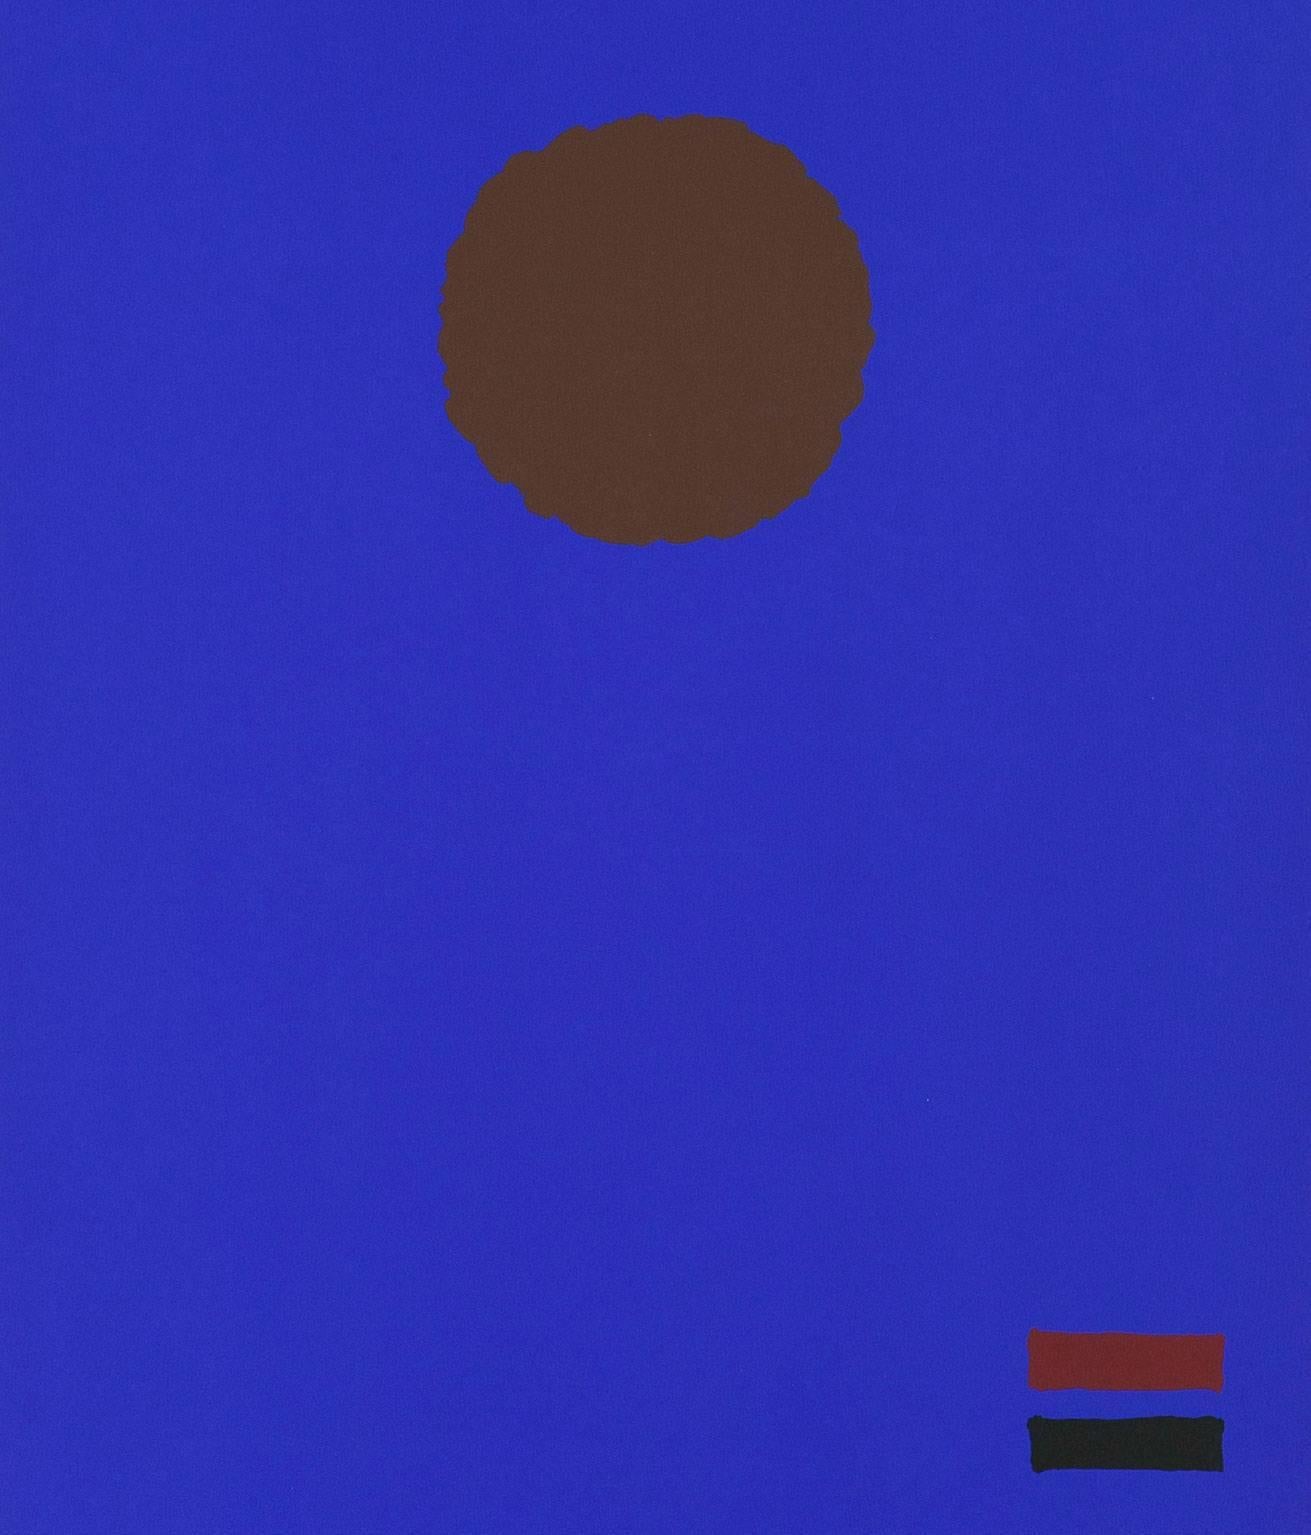 Adolph Gottlieb Abstract Print - Blue Night